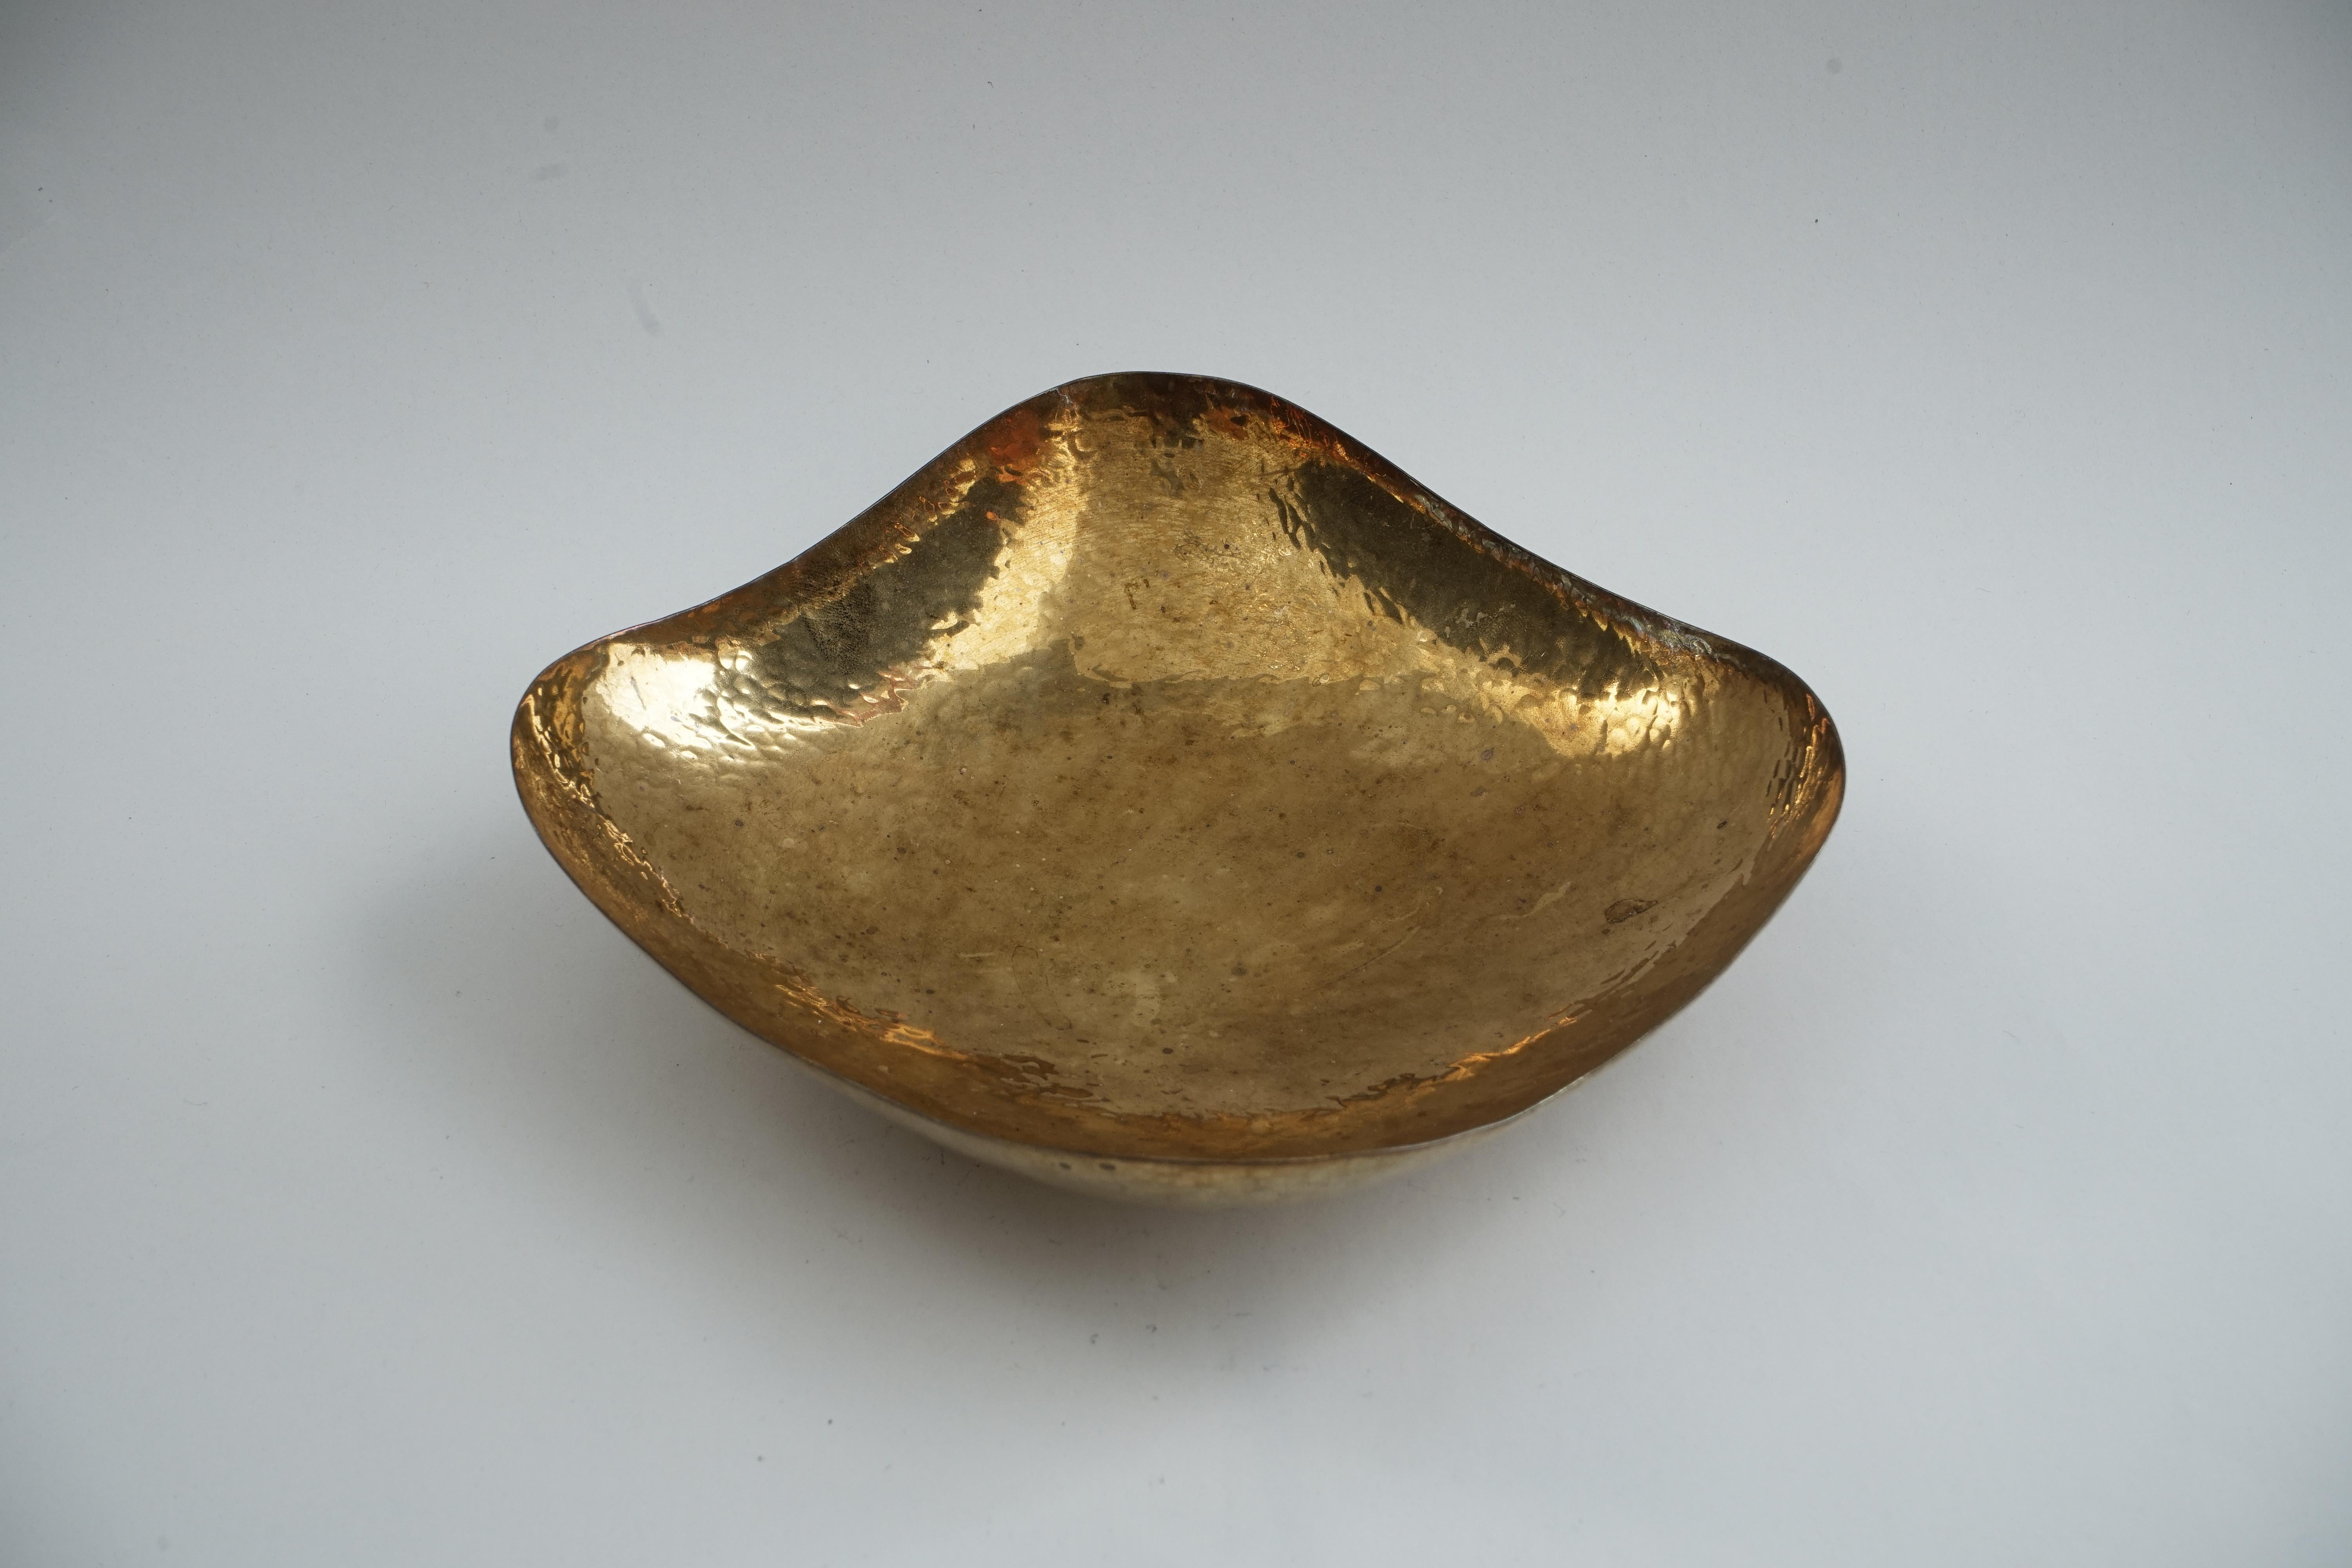 Hammered brass bowl, circa 1950s
Original condition.